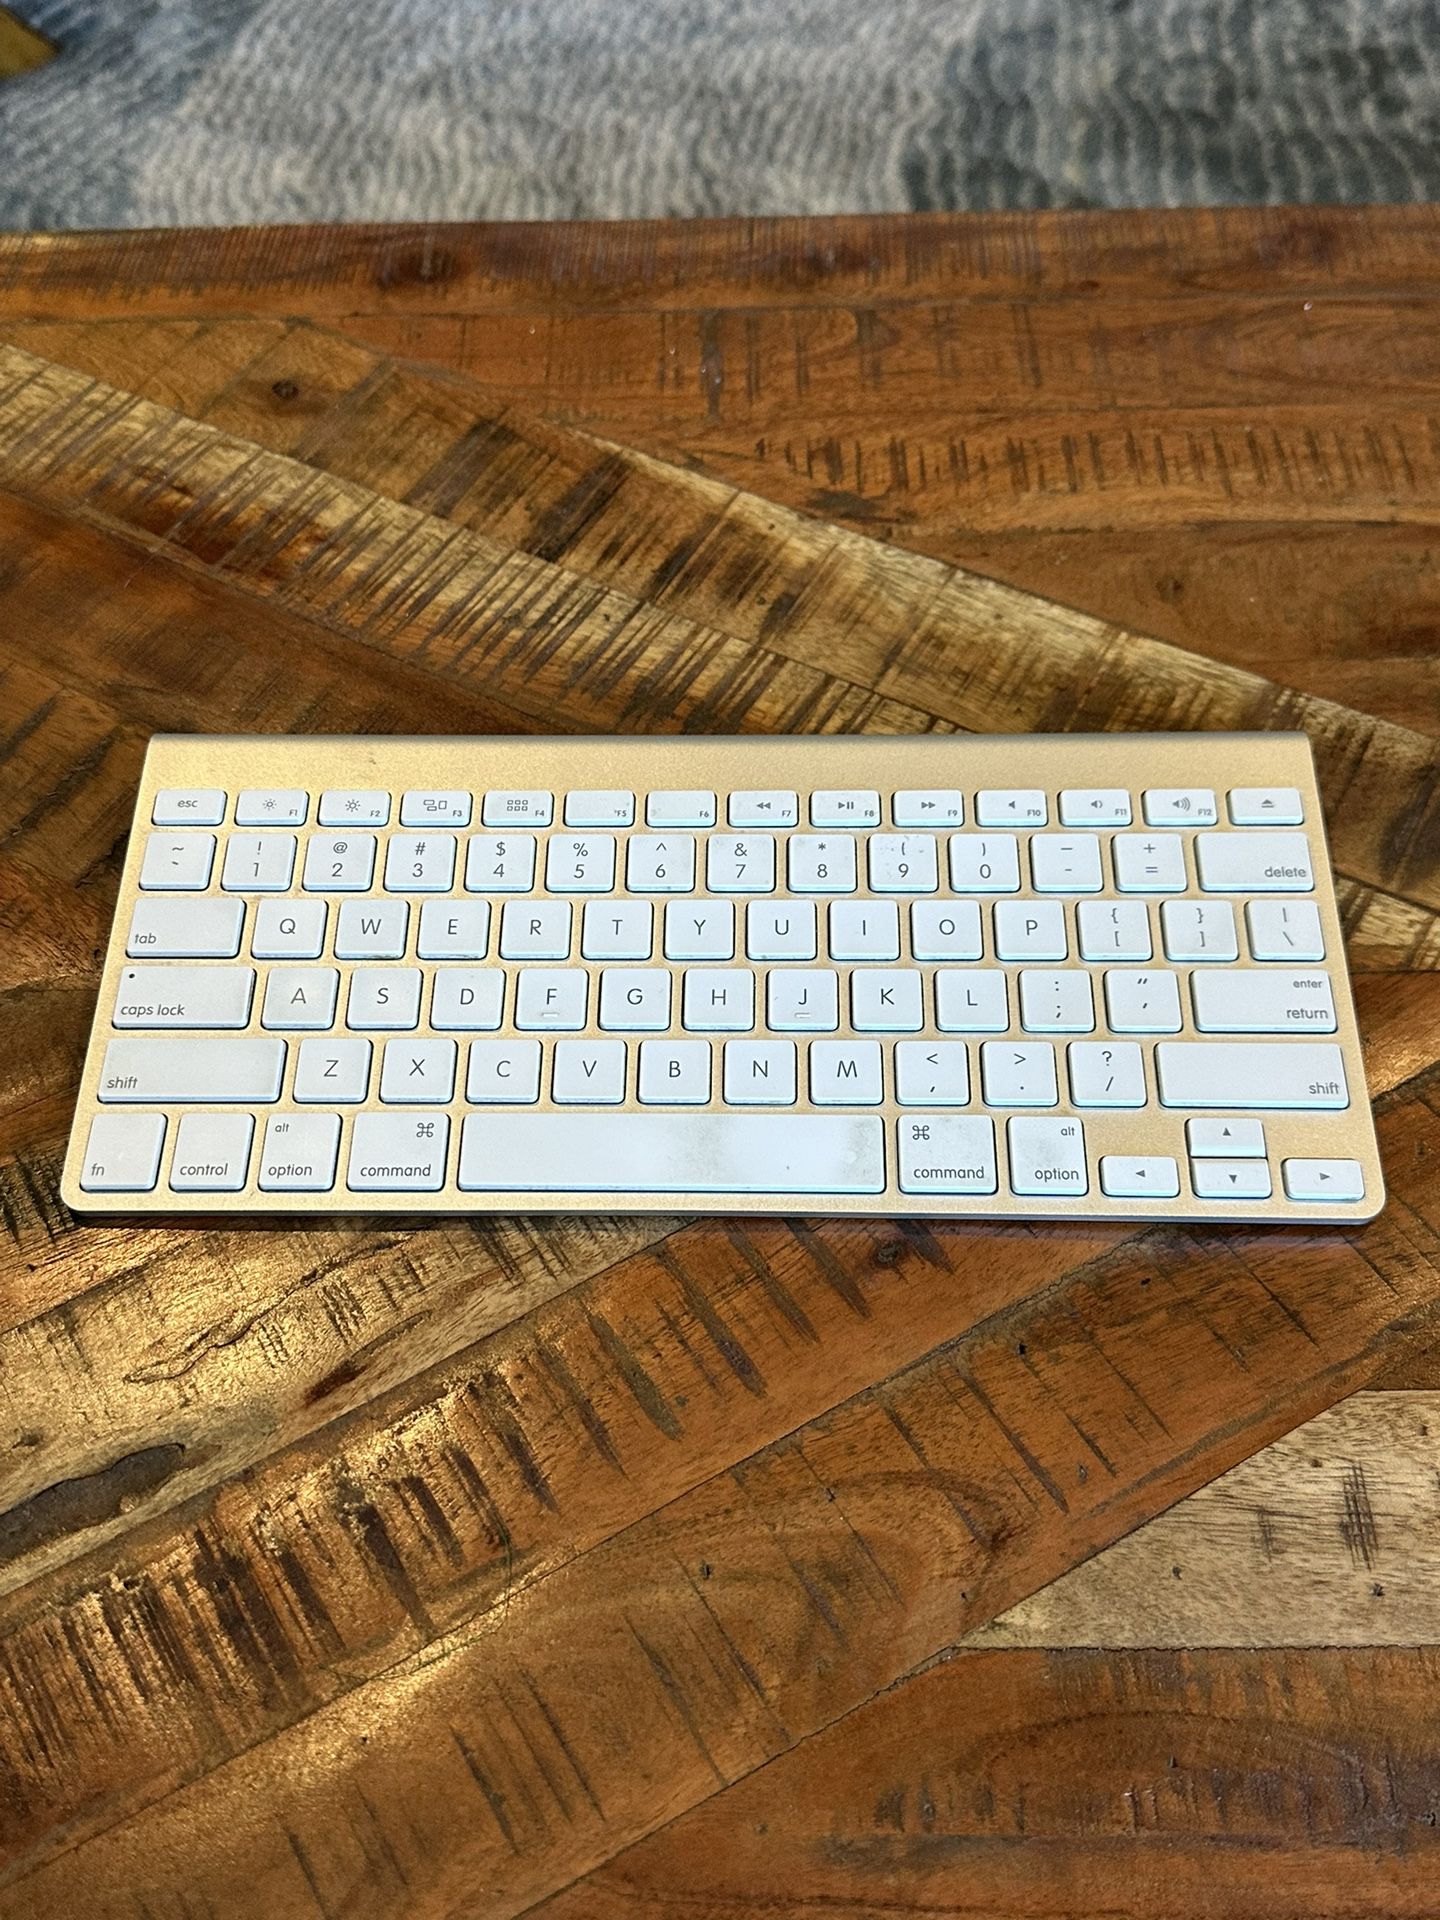 Apple Wireless Keyboard A1314 Bluetooth Keyboard Tested, Fully Working